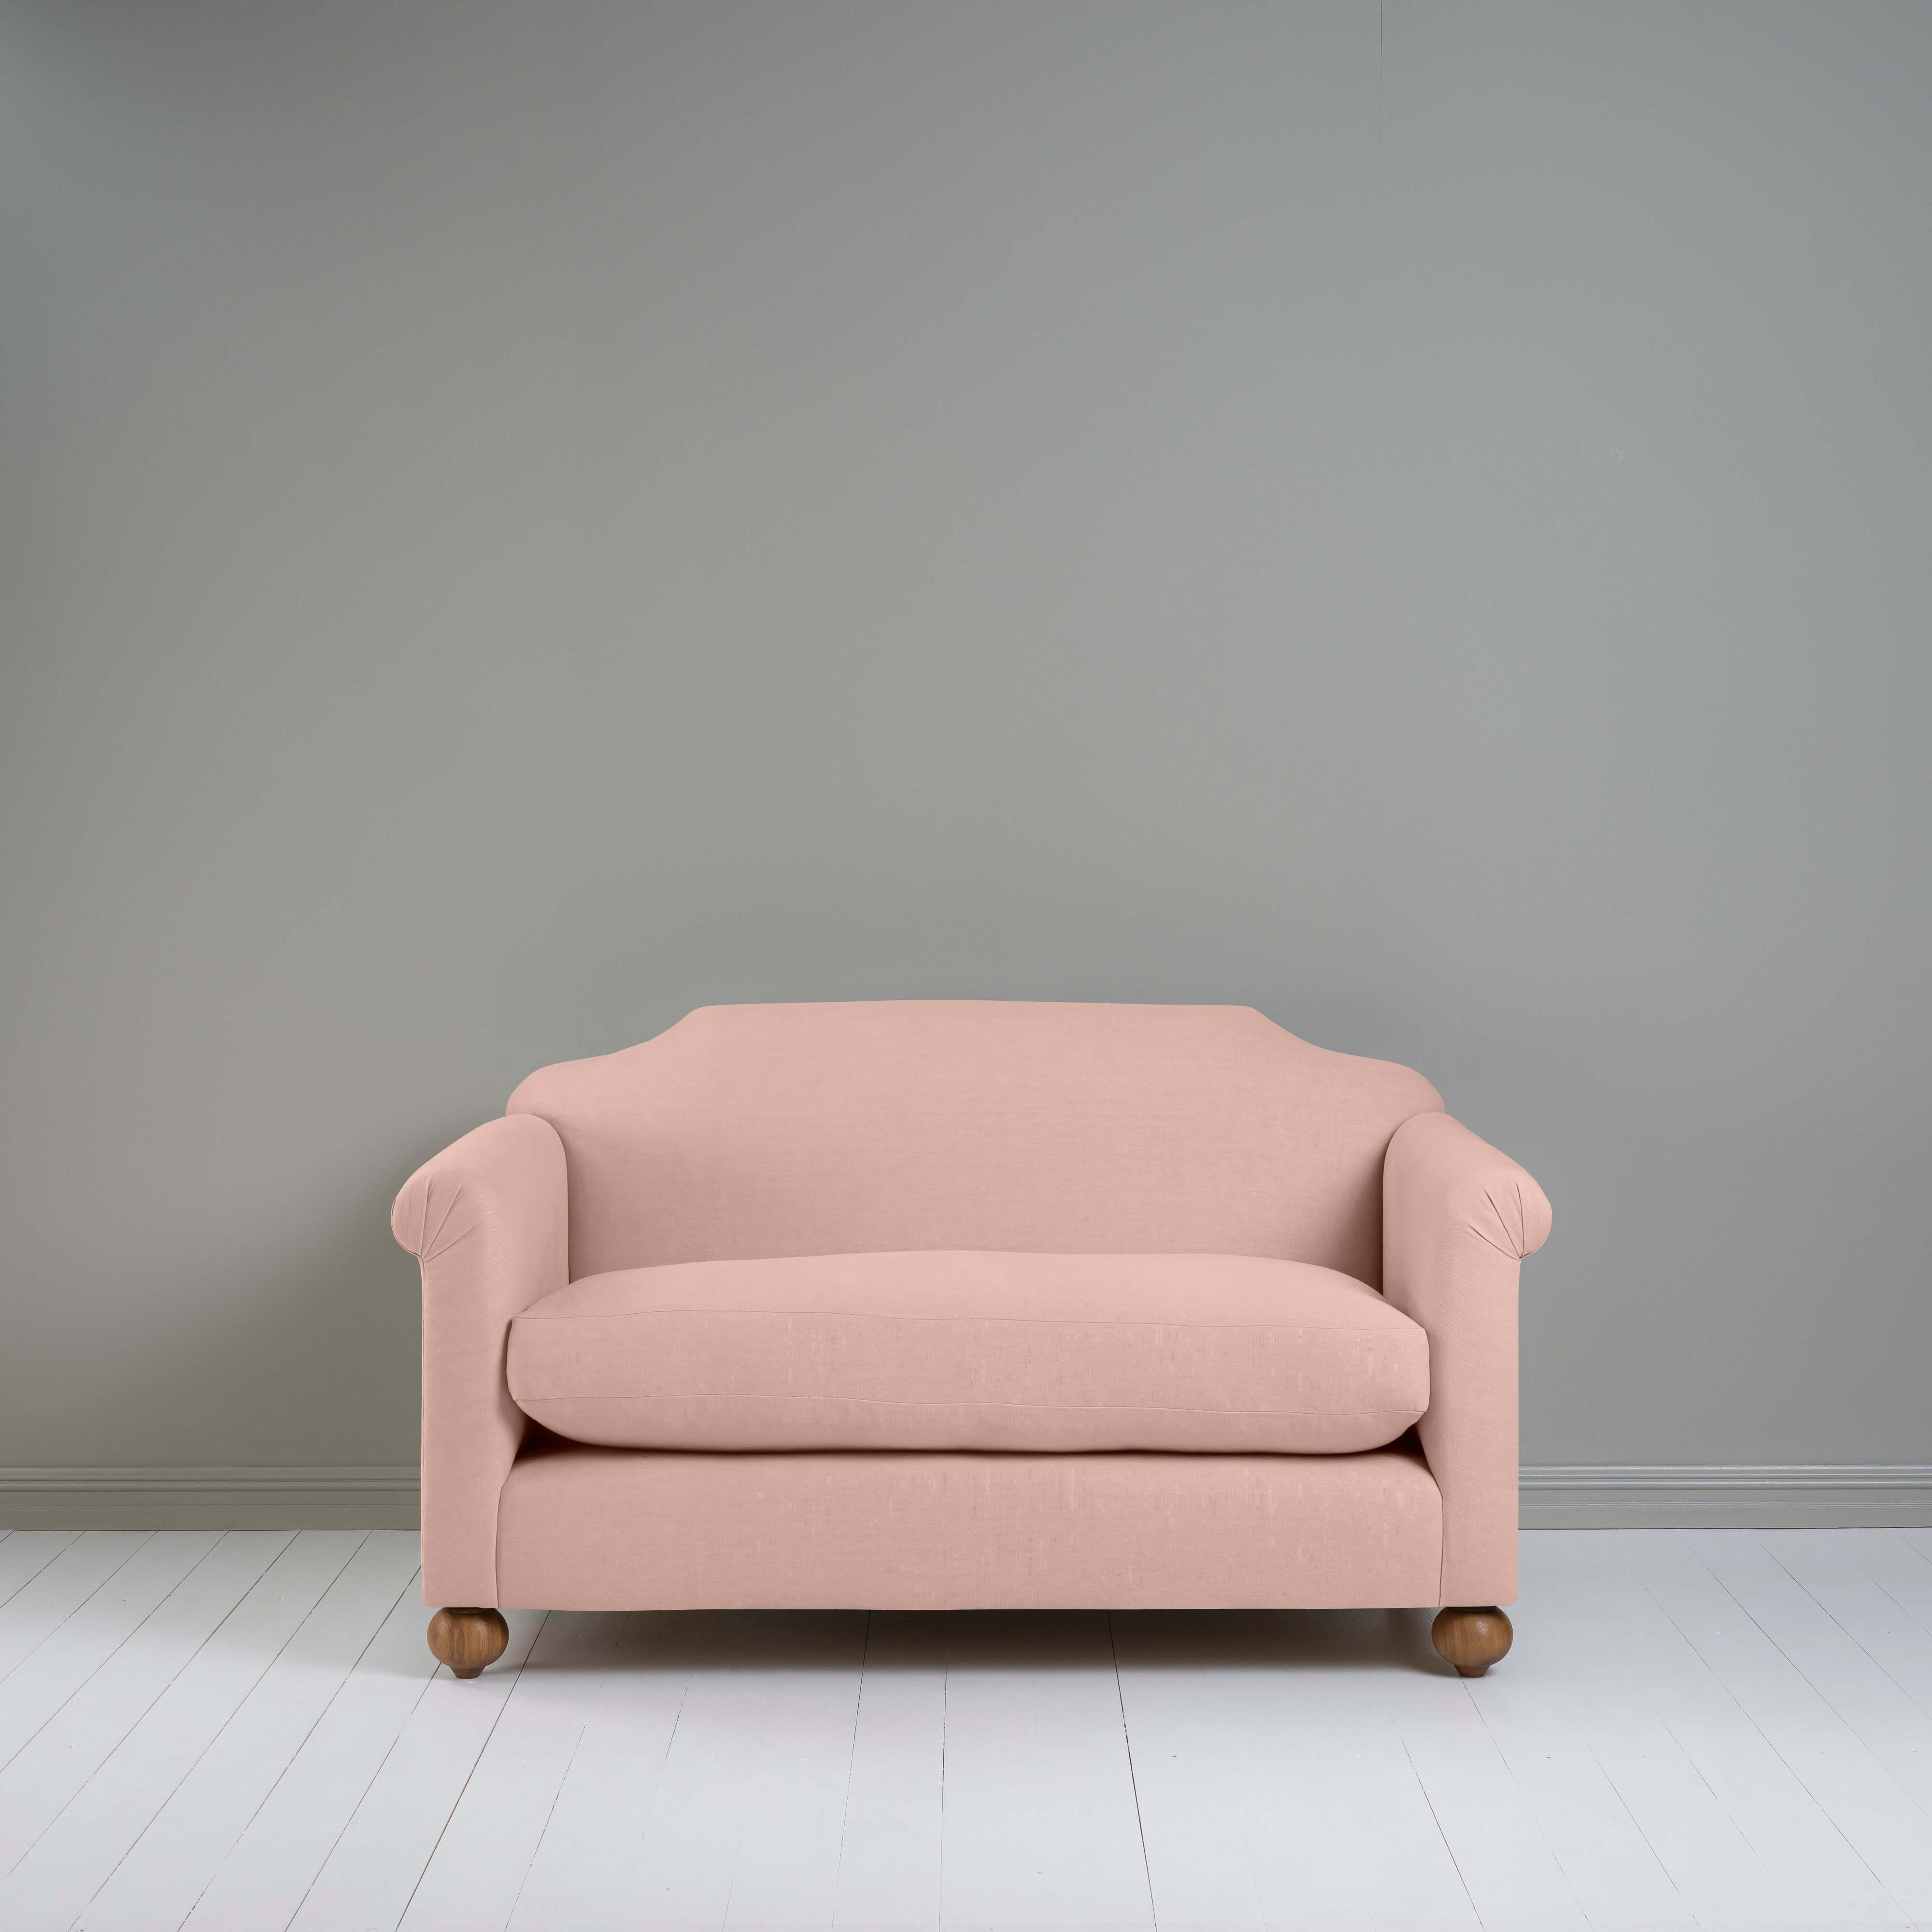  Dolittle 2 Seater Sofa in Laidback Linen Dusky Pink - Nicola Harding 